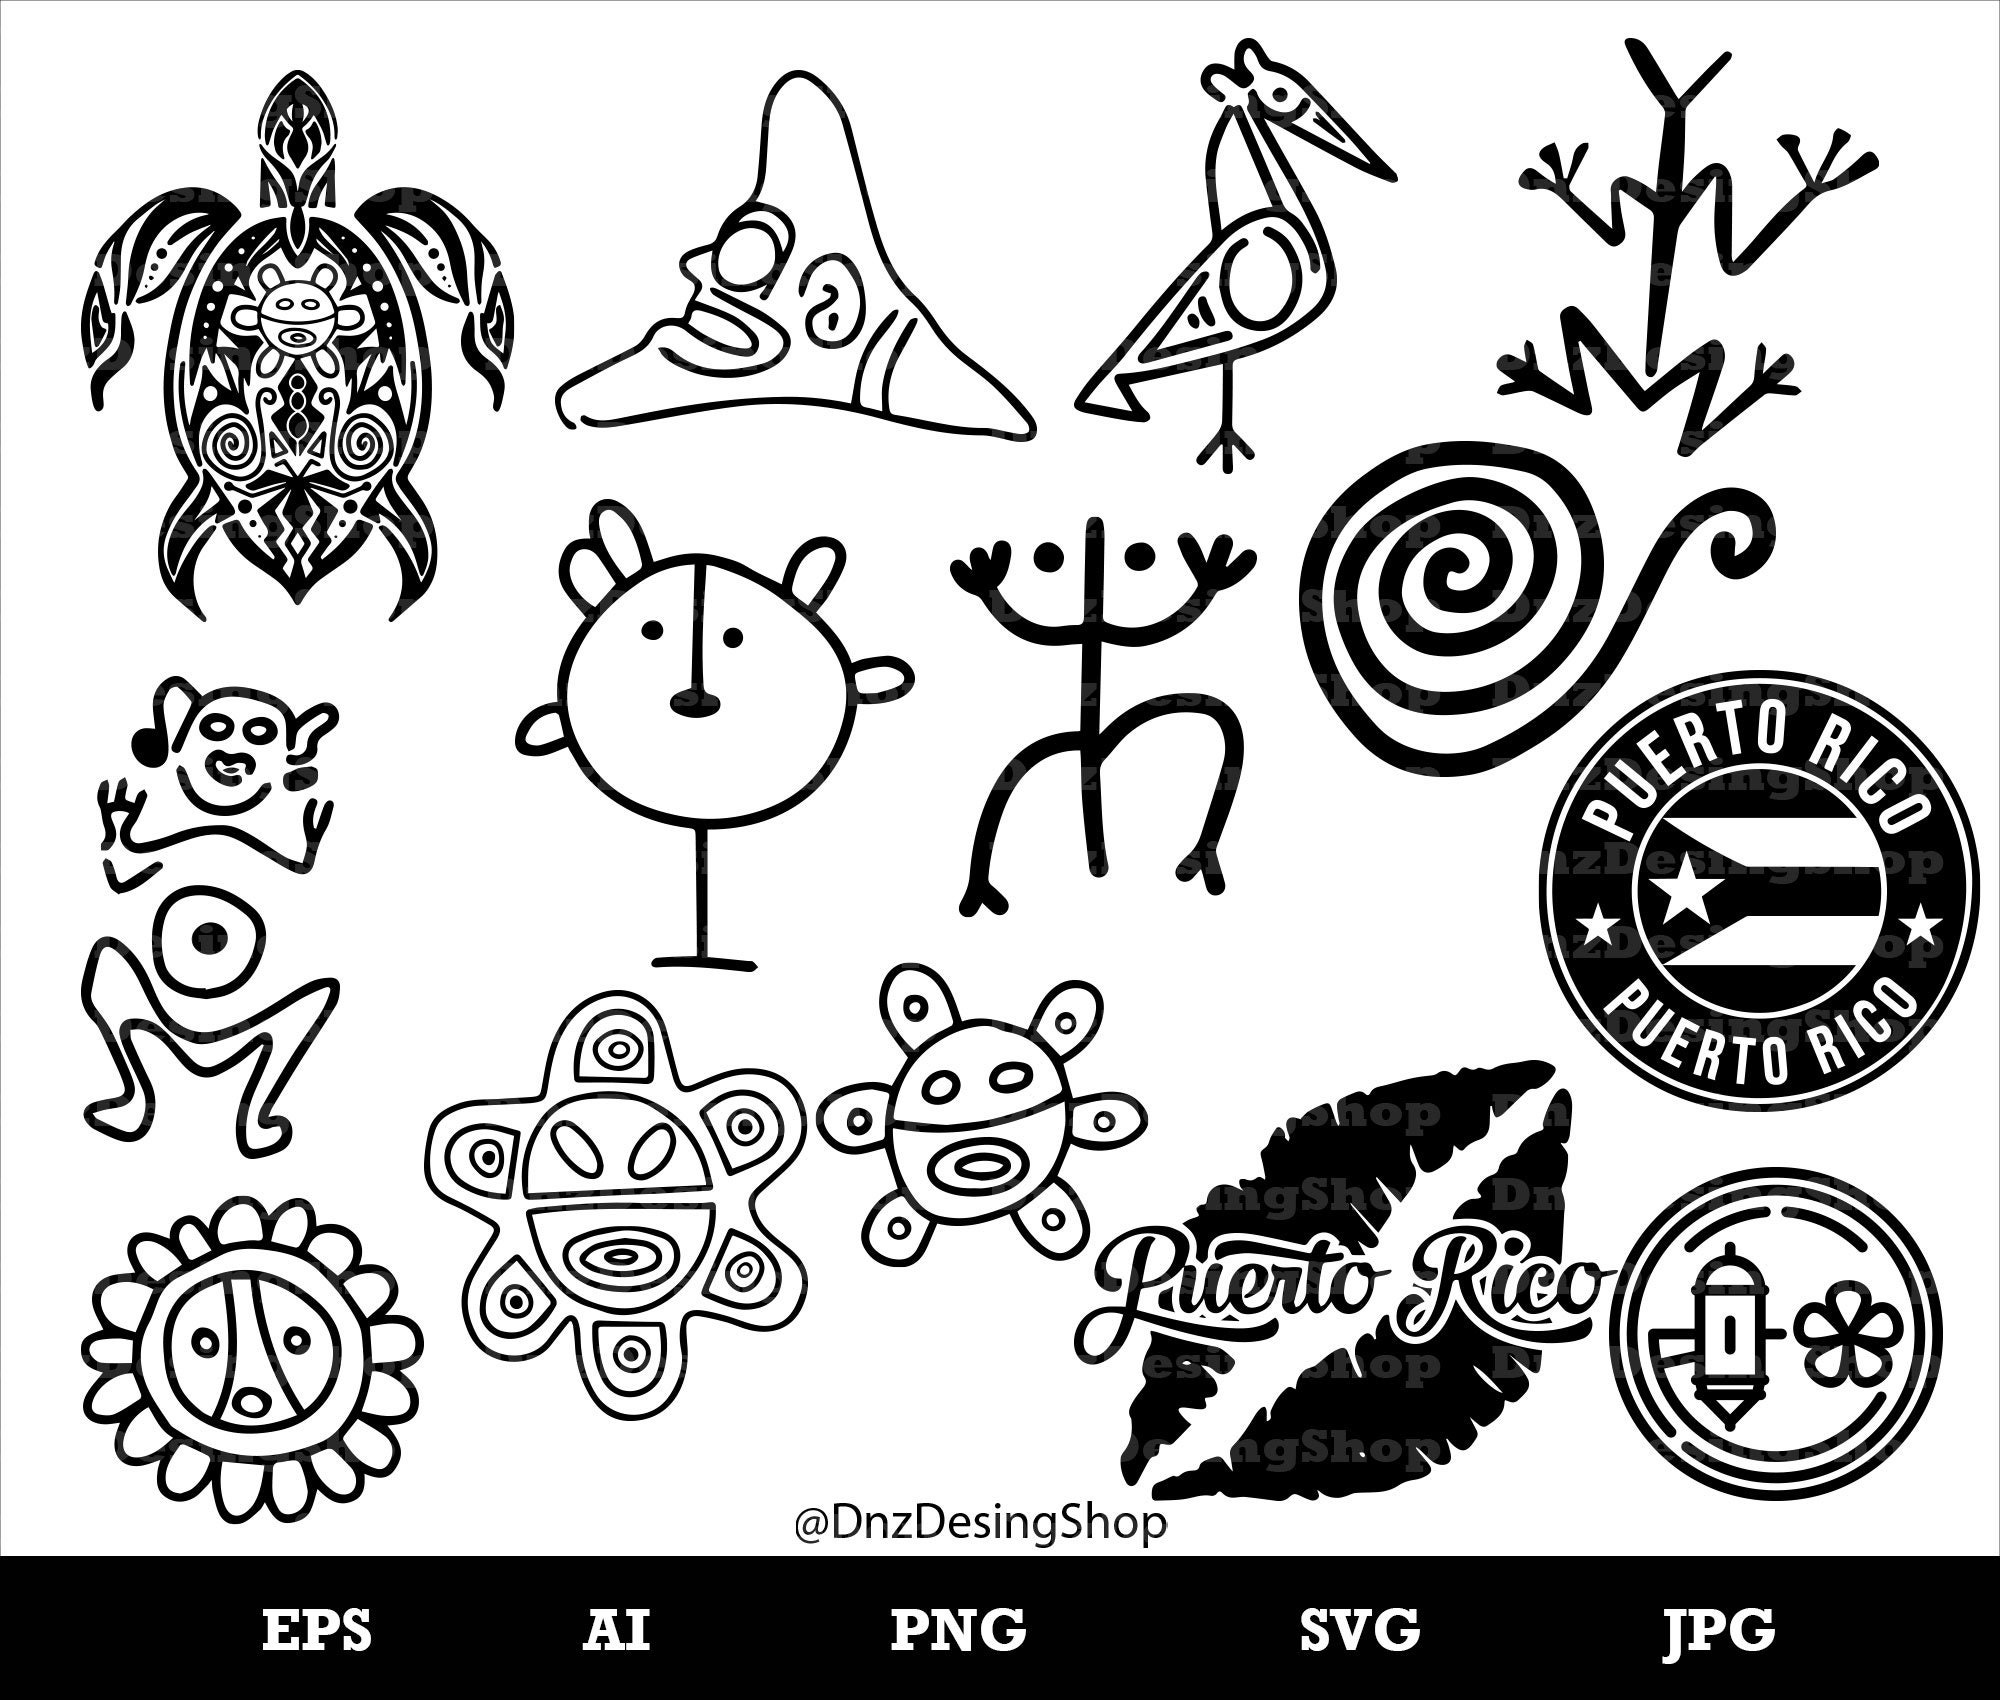 Taino Indian Symbols